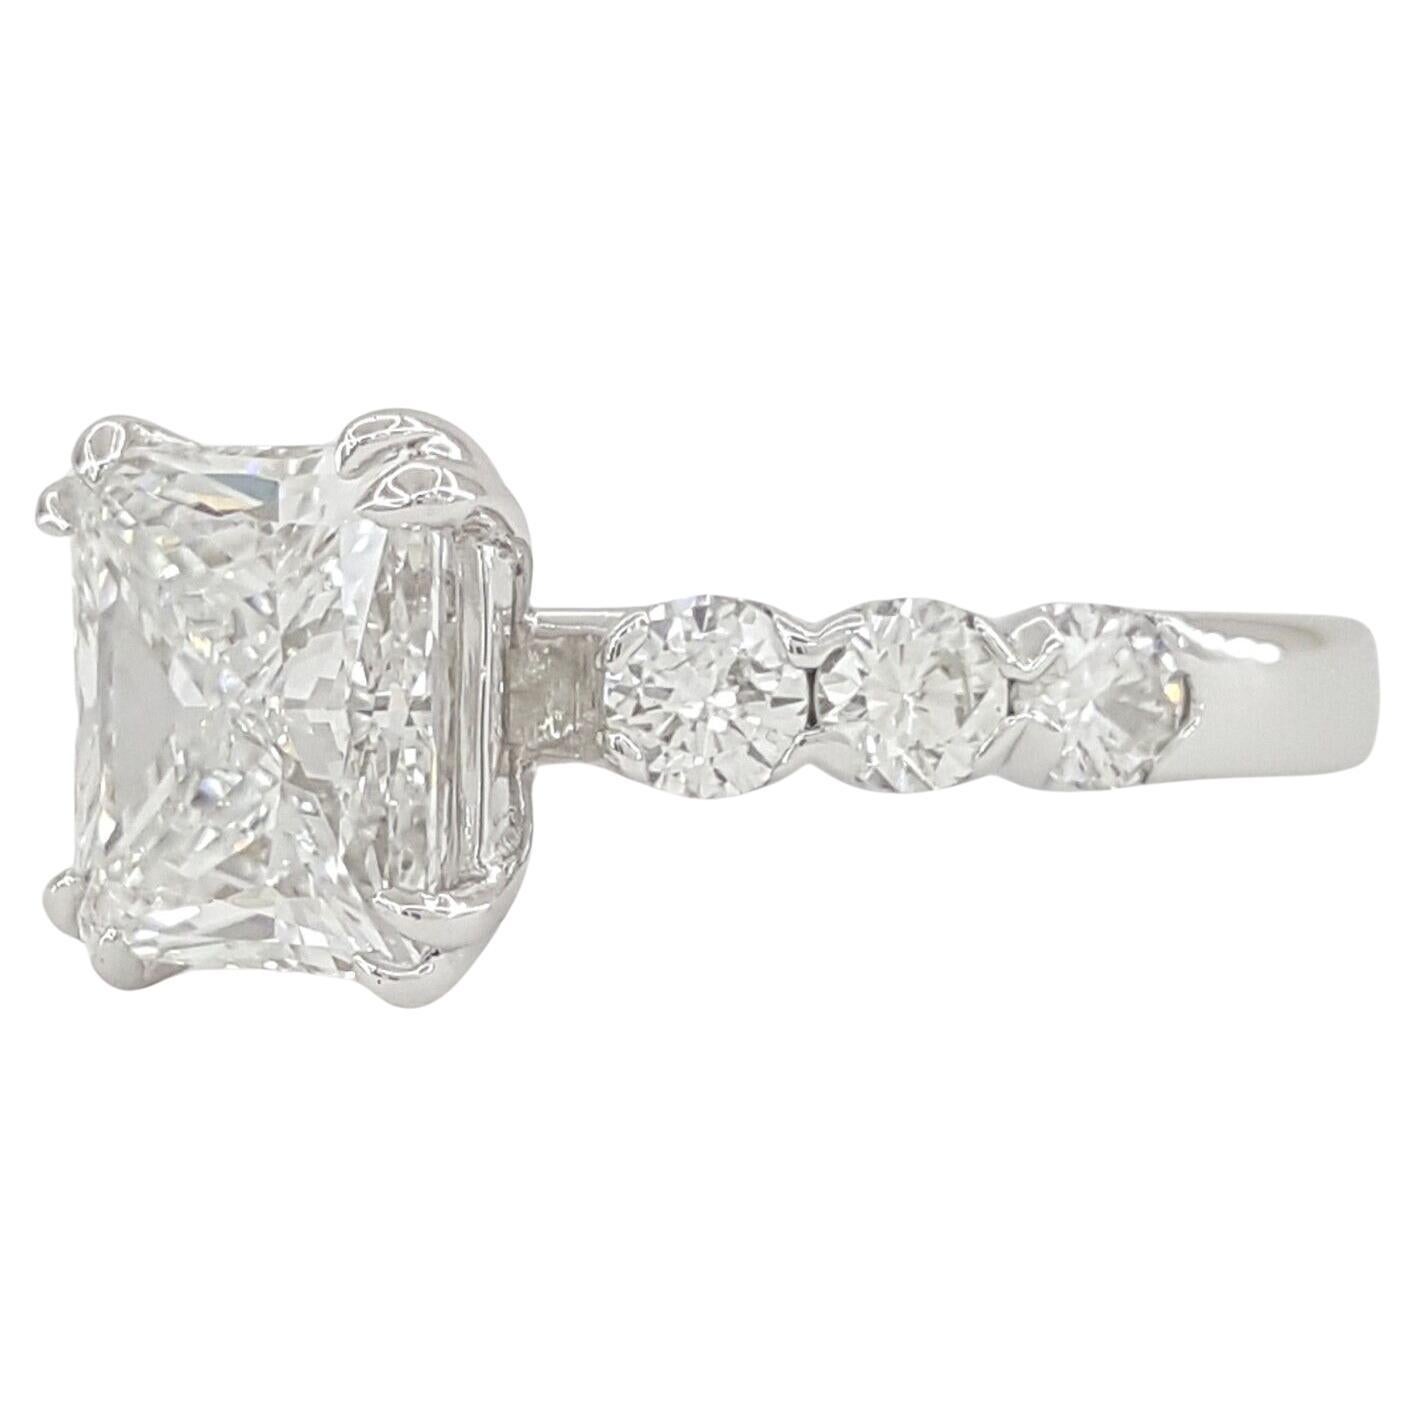 2 carat radiant cut diamond ring on hand